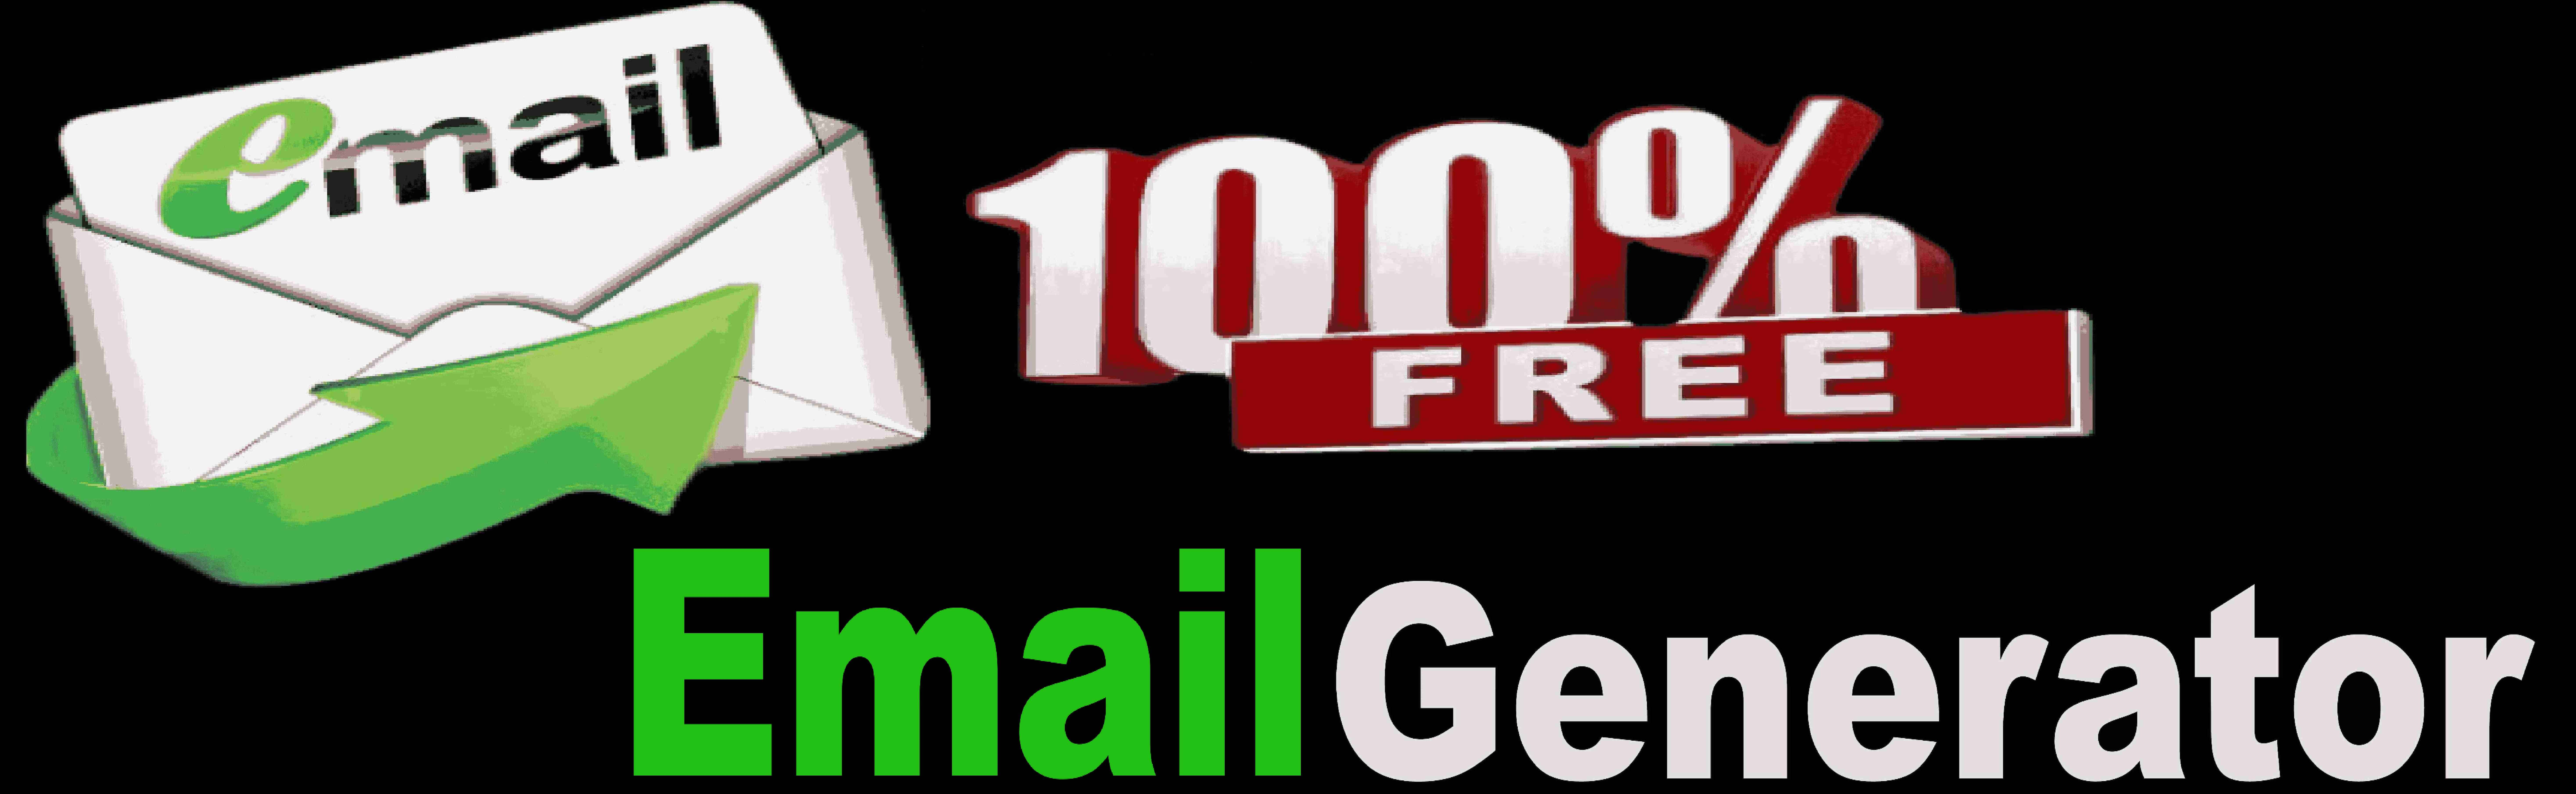 Free Email Generator